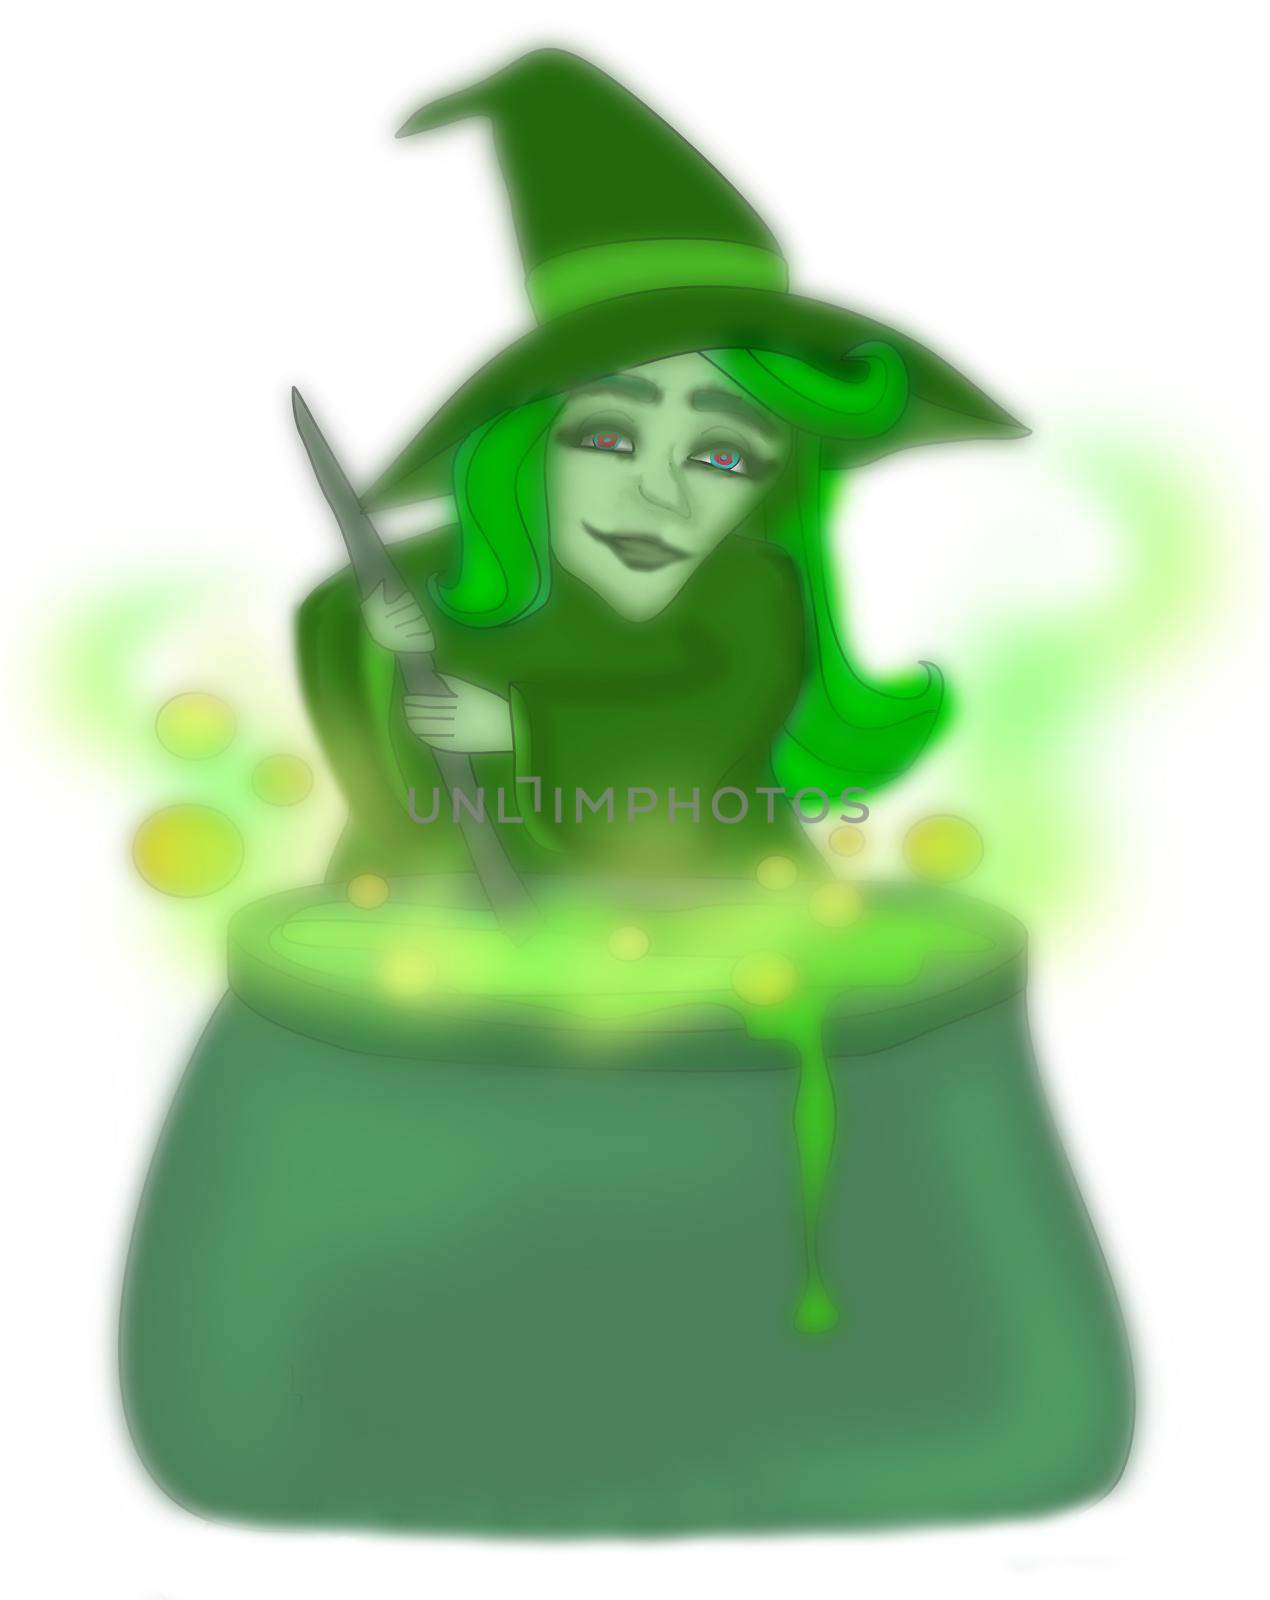 Halloween witch preparing potion